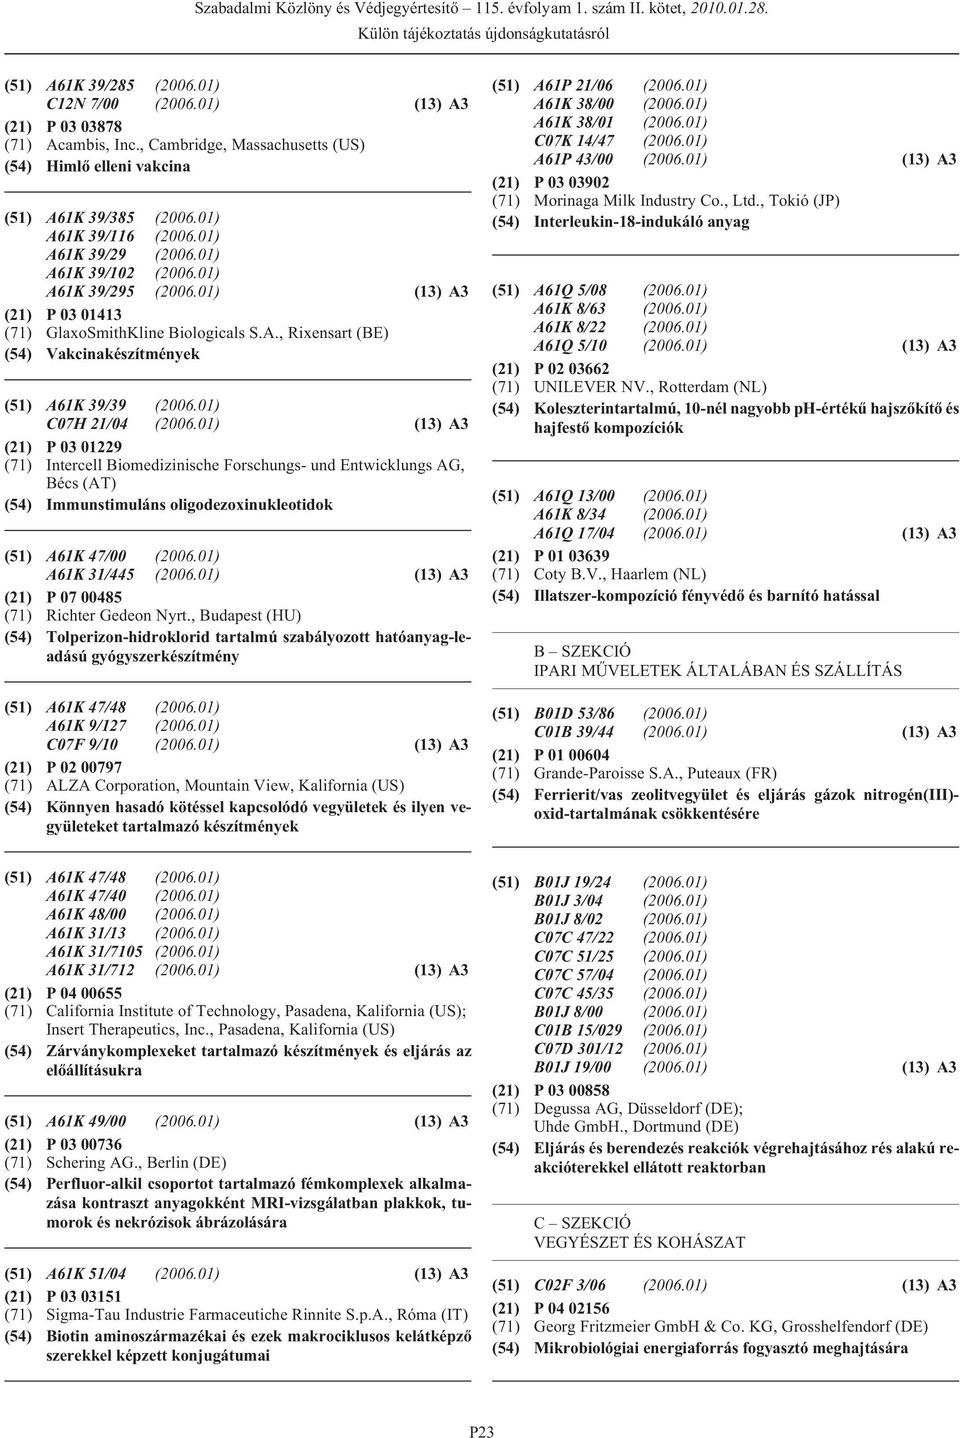 01) C07H 21/04 (2006.01) (13) A3 (21) P 03 01229 (71) Intercell Biomedizinische Forschungs- und Entwicklungs AG, Bécs (AT) (54) Immunstimuláns oligodezoxinukleotidok (51) A61K 47/00 (2006.